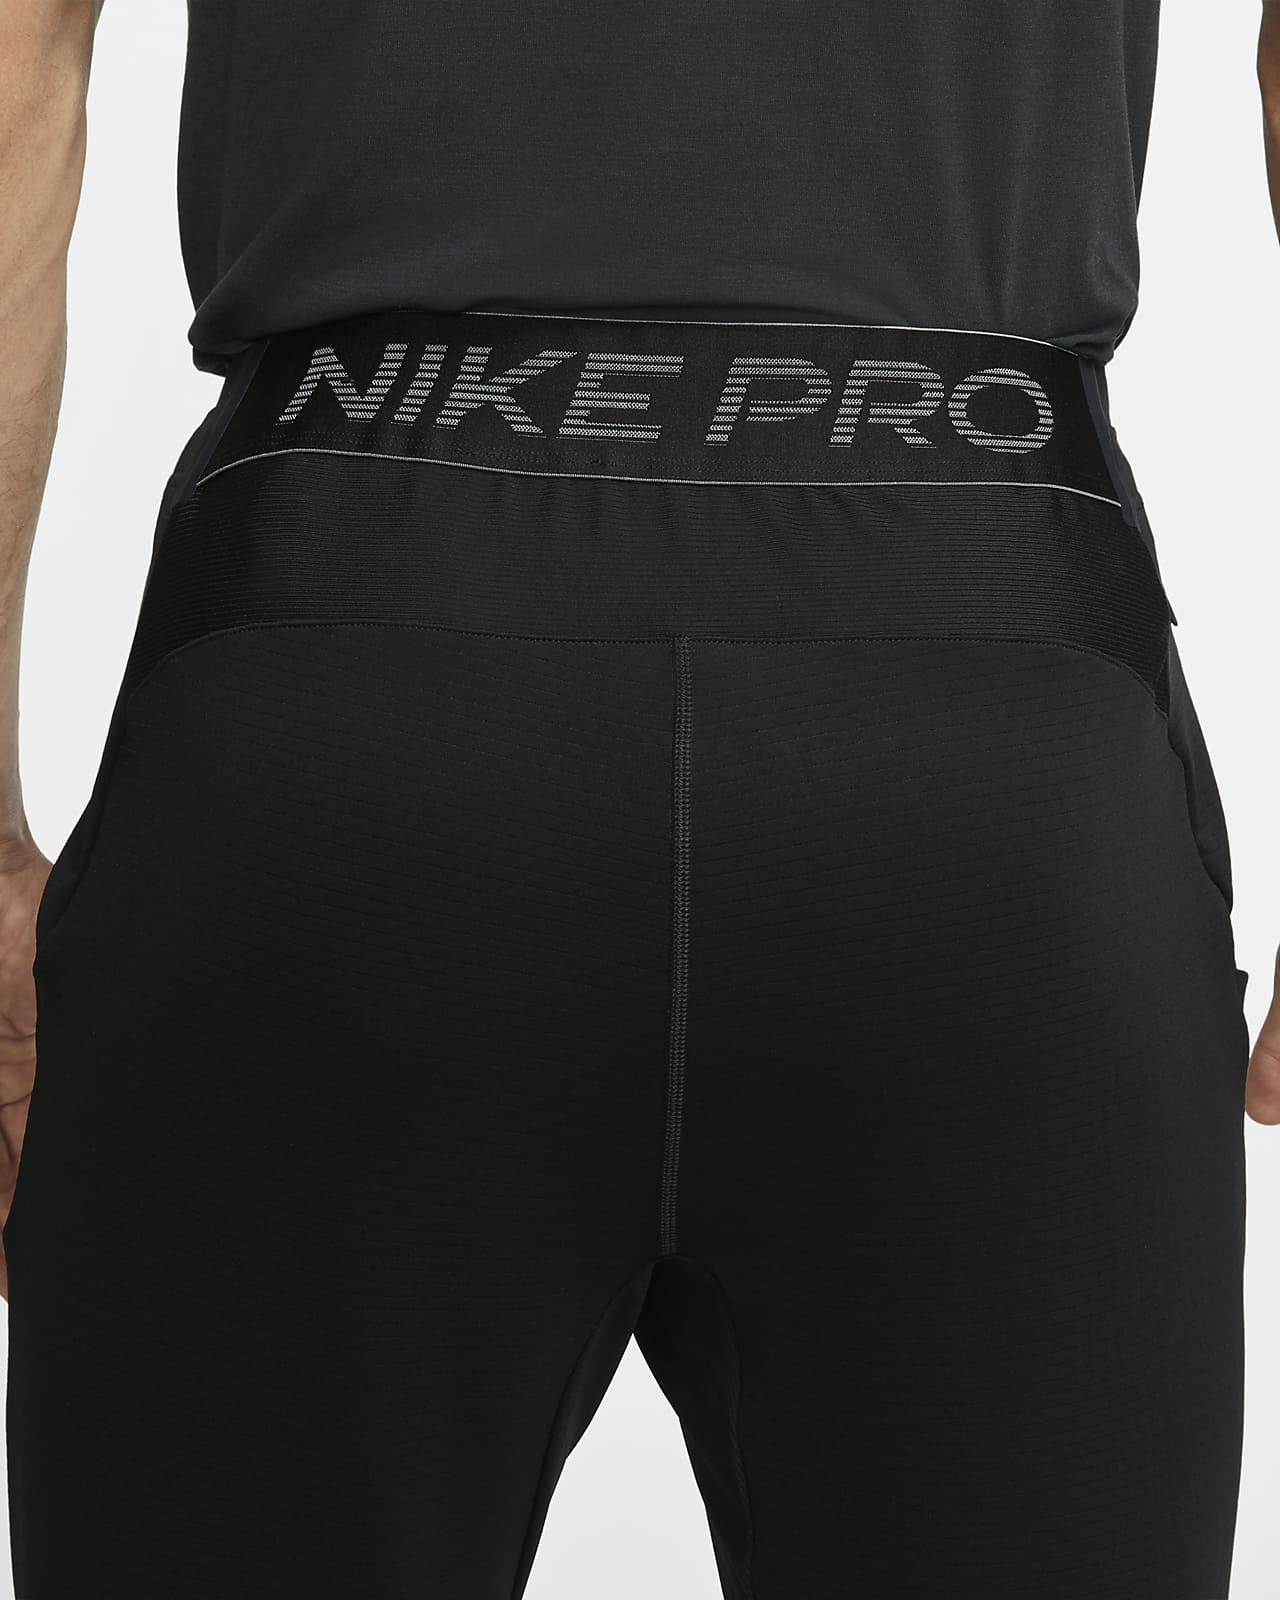 nike pro workout pants